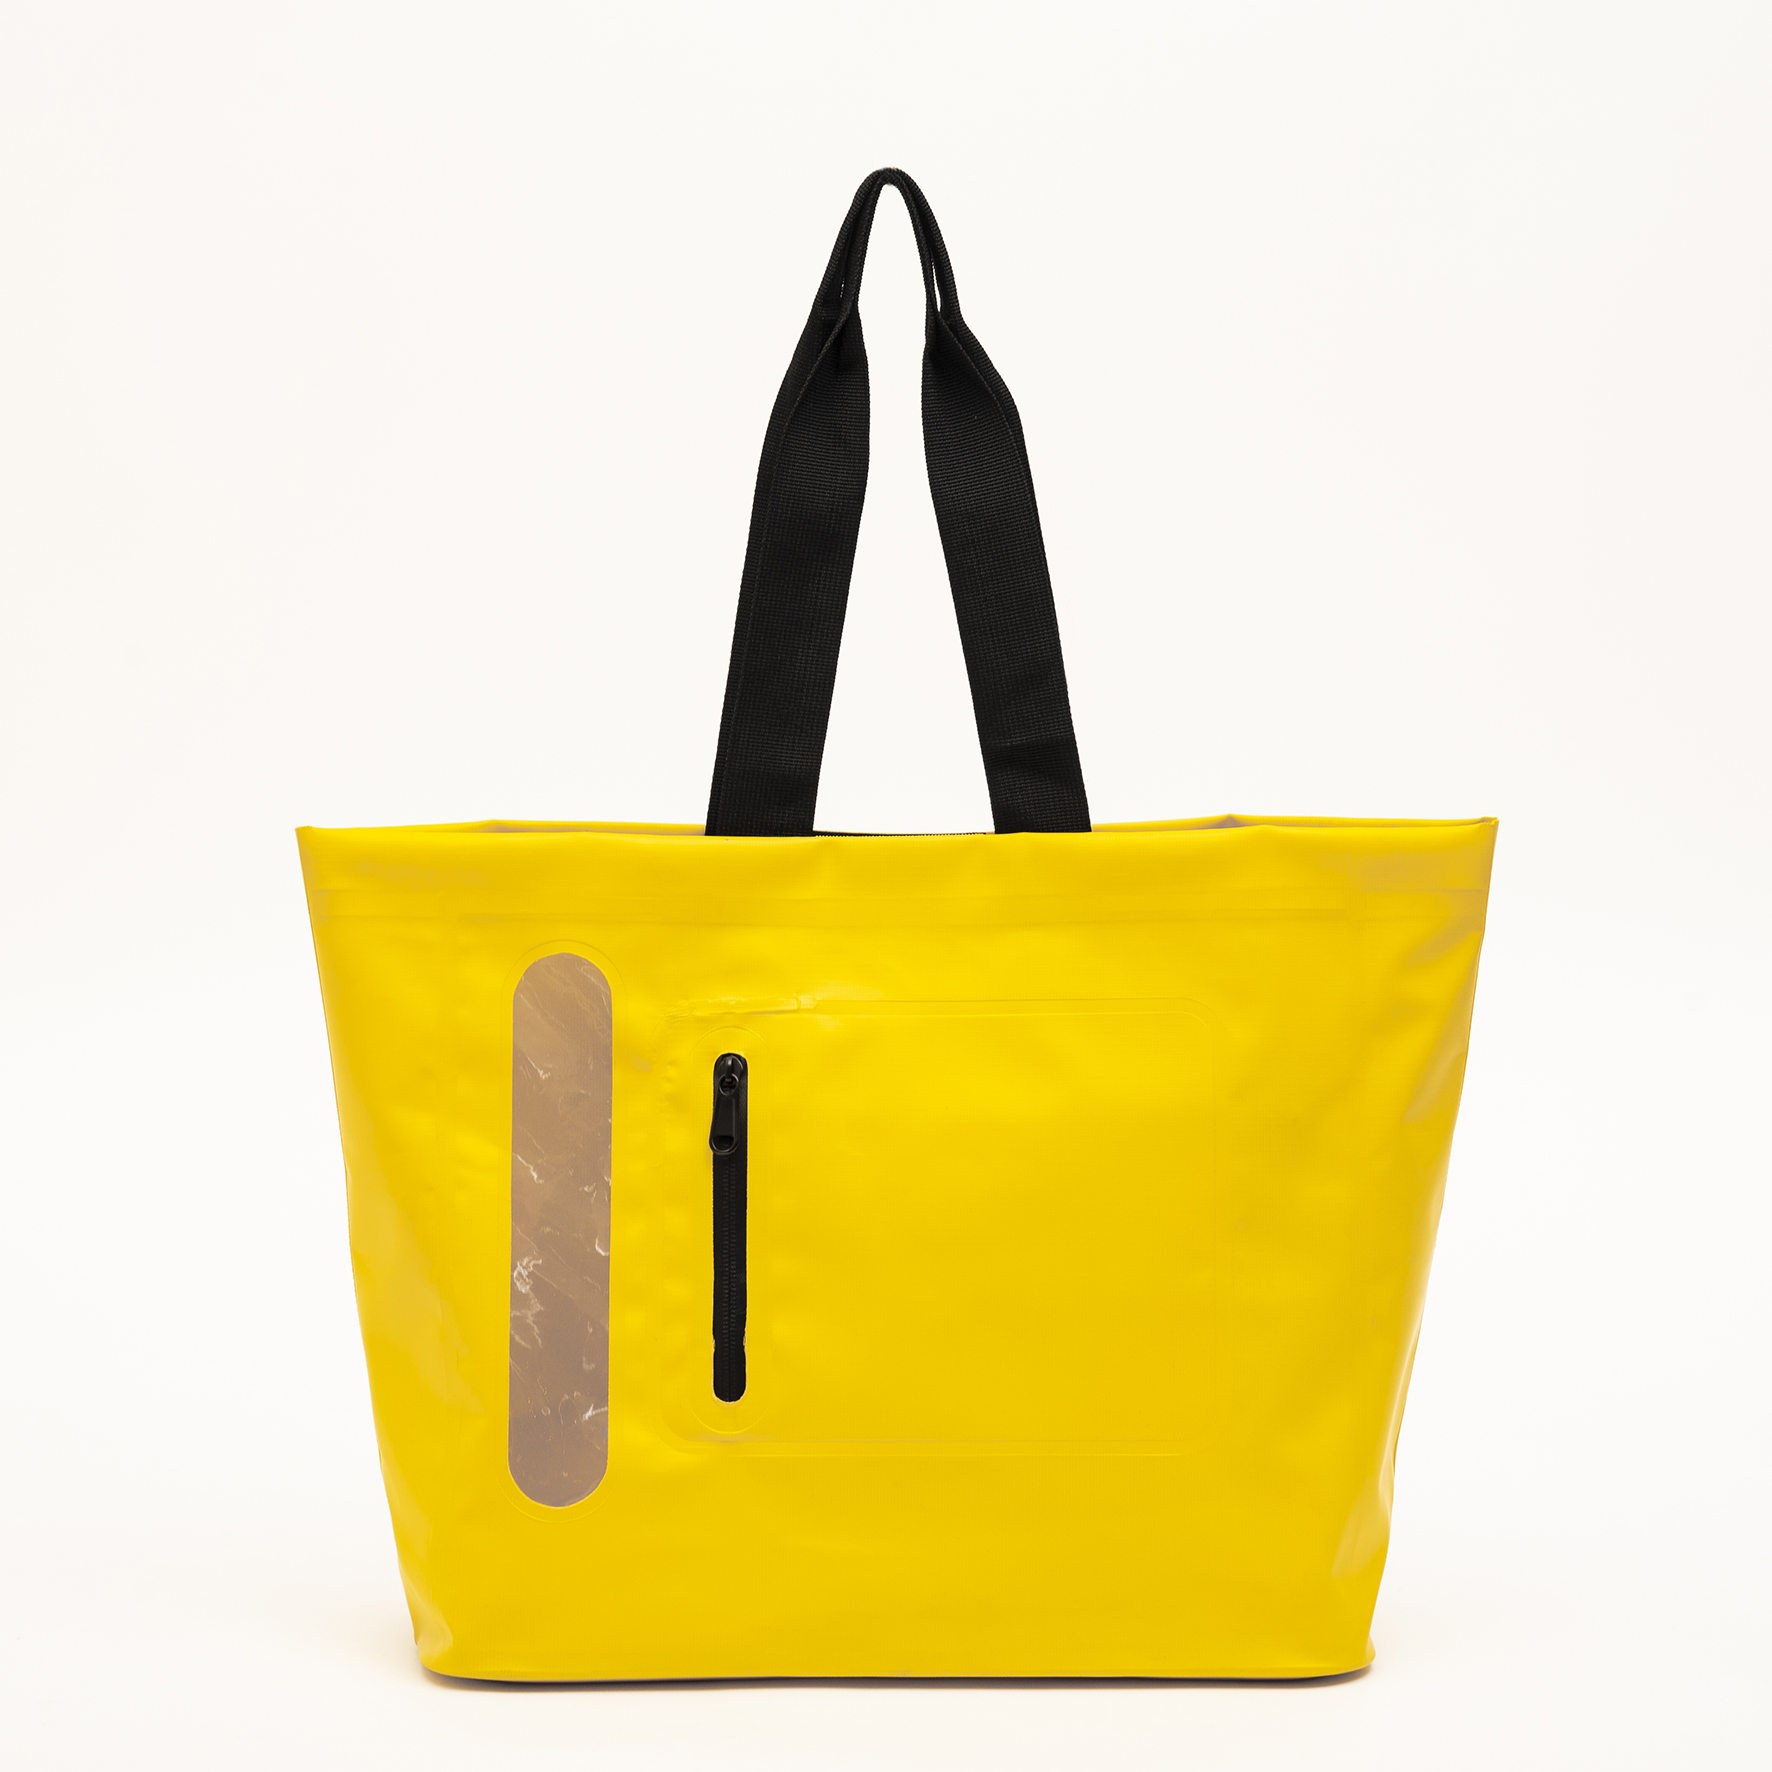 Best-Selling Multicolor Gym Sports Bag Women - New design heat seal fashion tote beach bag waterproof bag – Twinkling Star